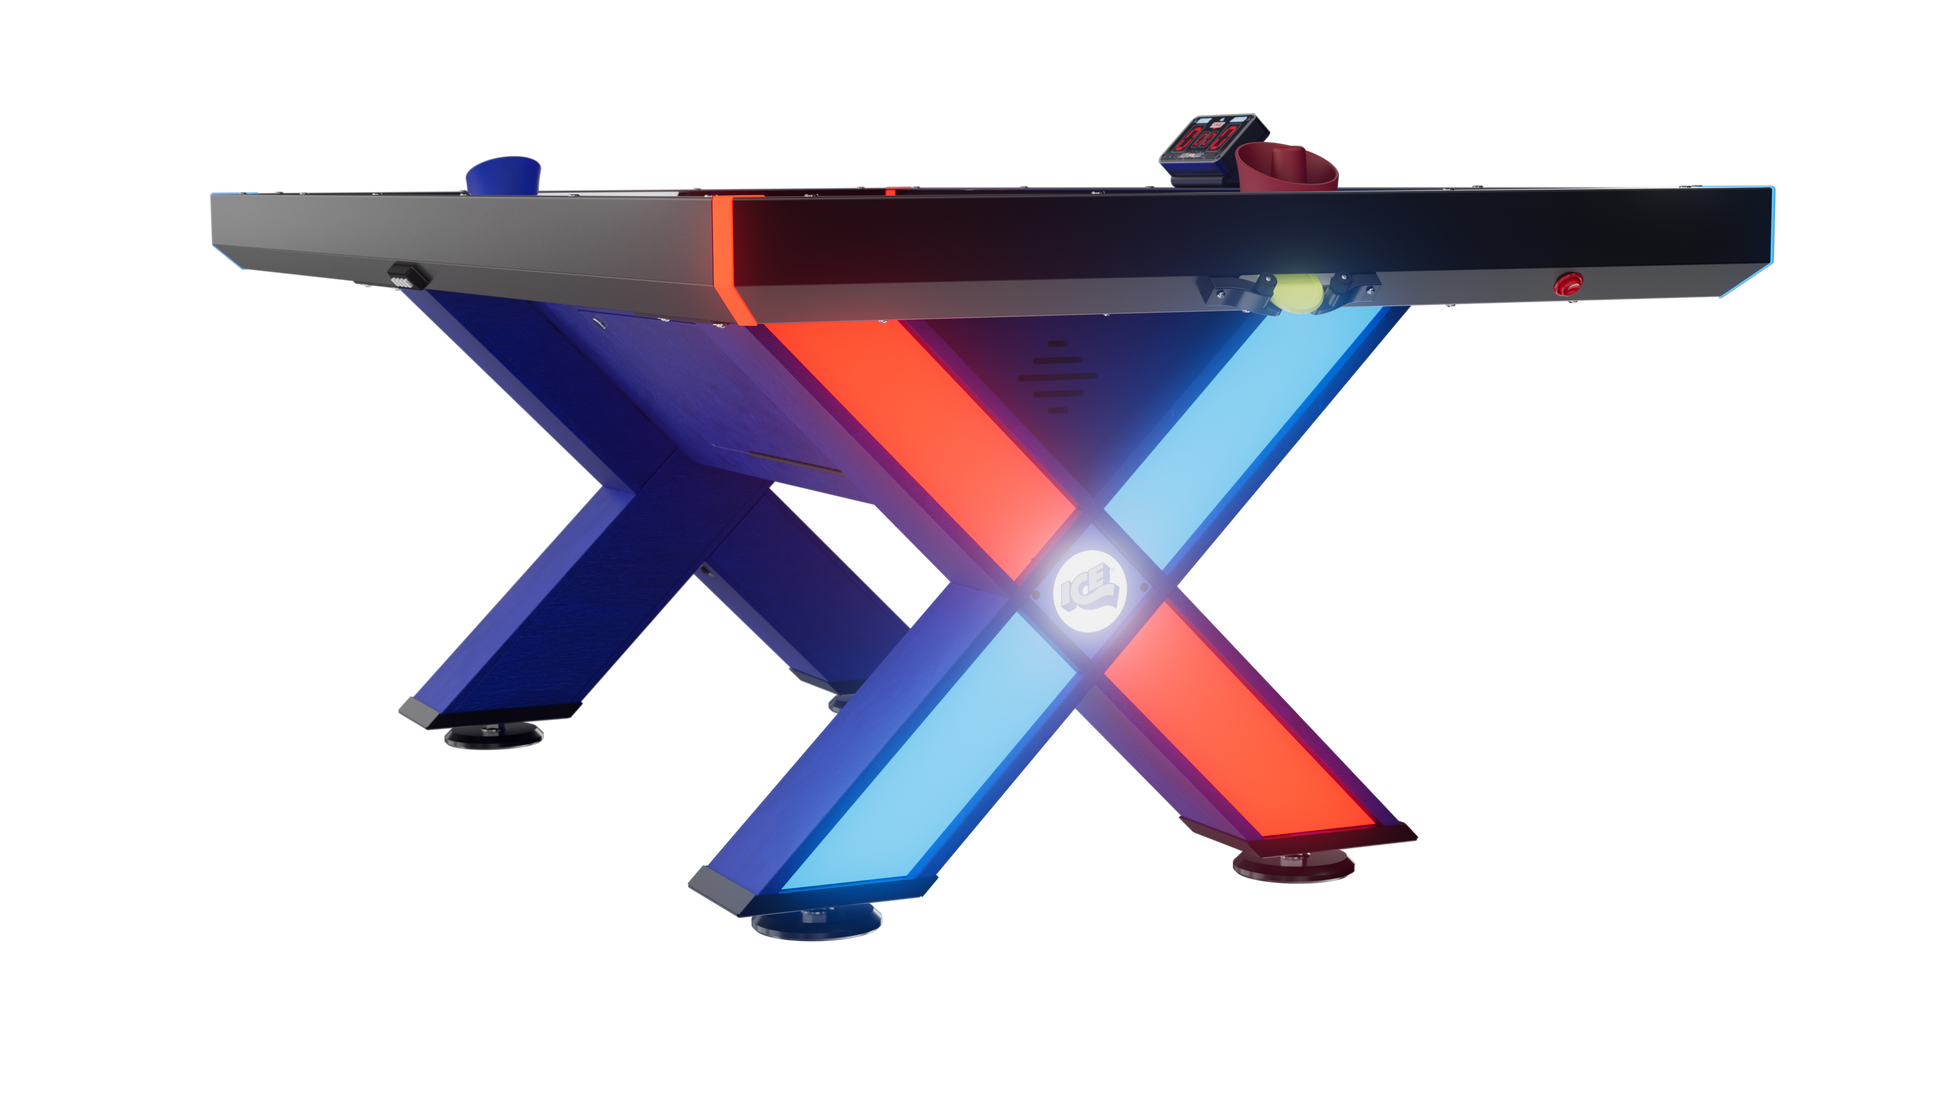 Home Air FX Pro 8’ Air Hockey Playfield - Prime Arcades Inc